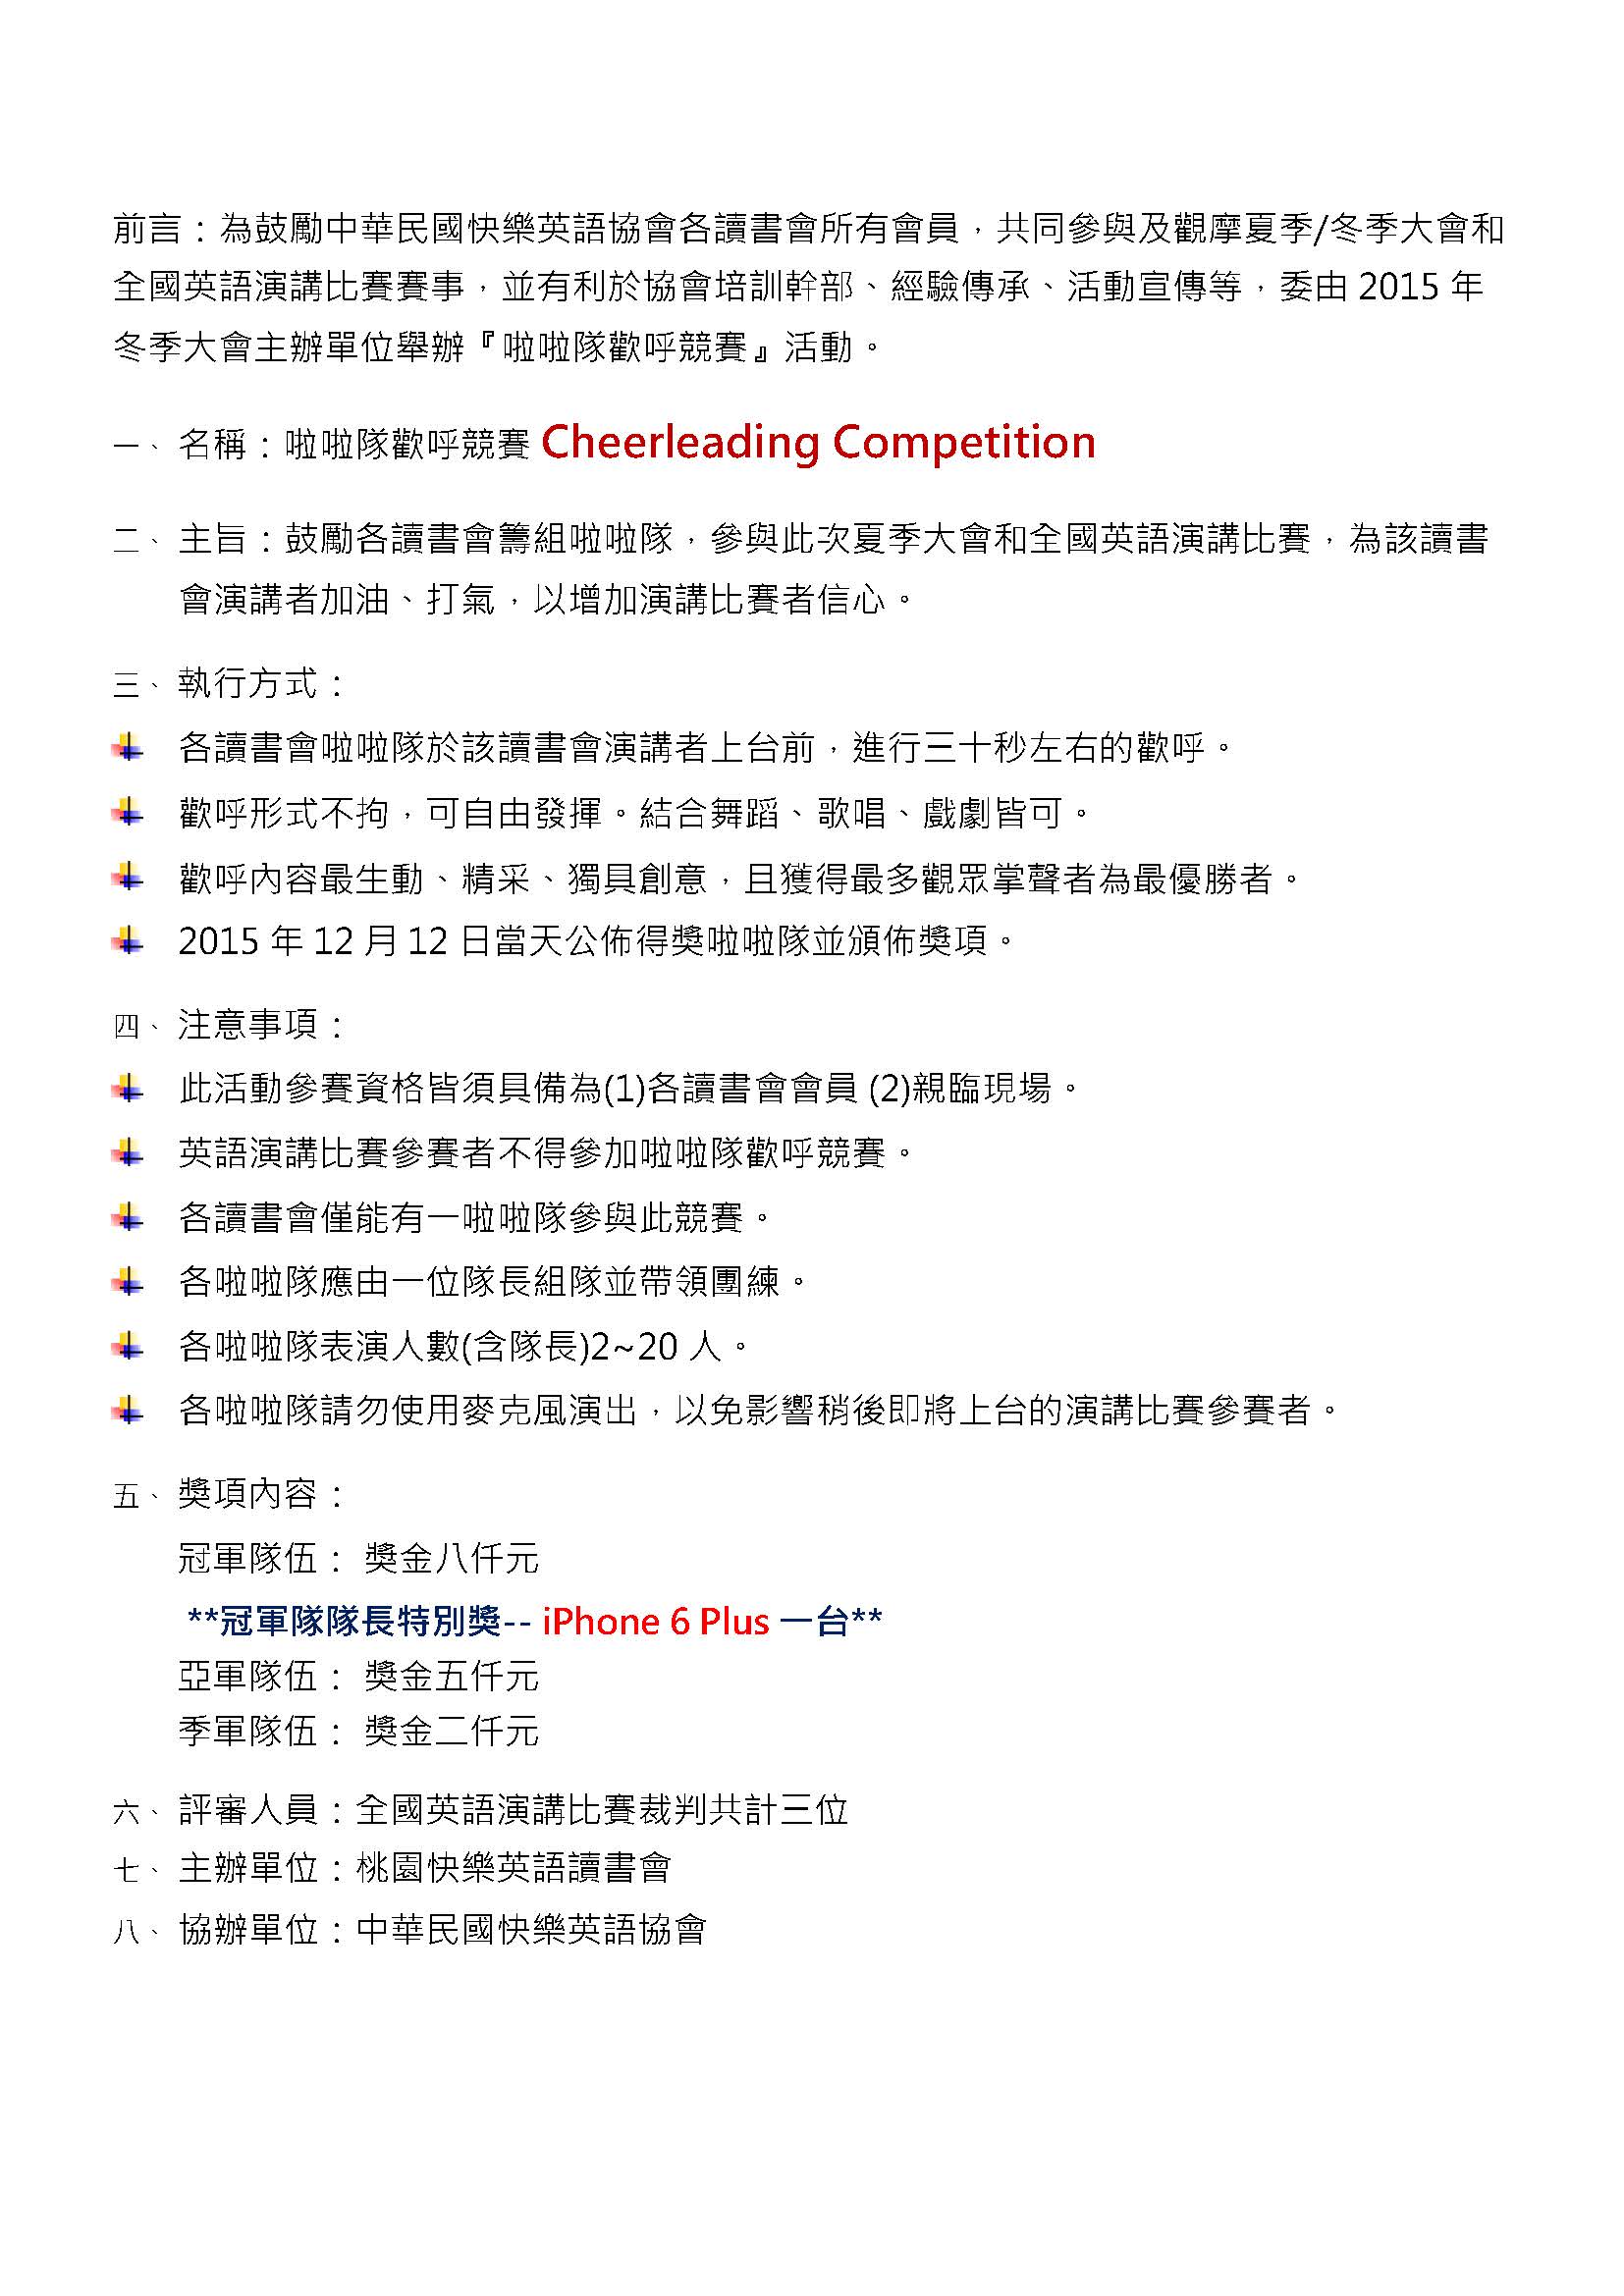 2015 Winter Cheerleading Competition.jpg